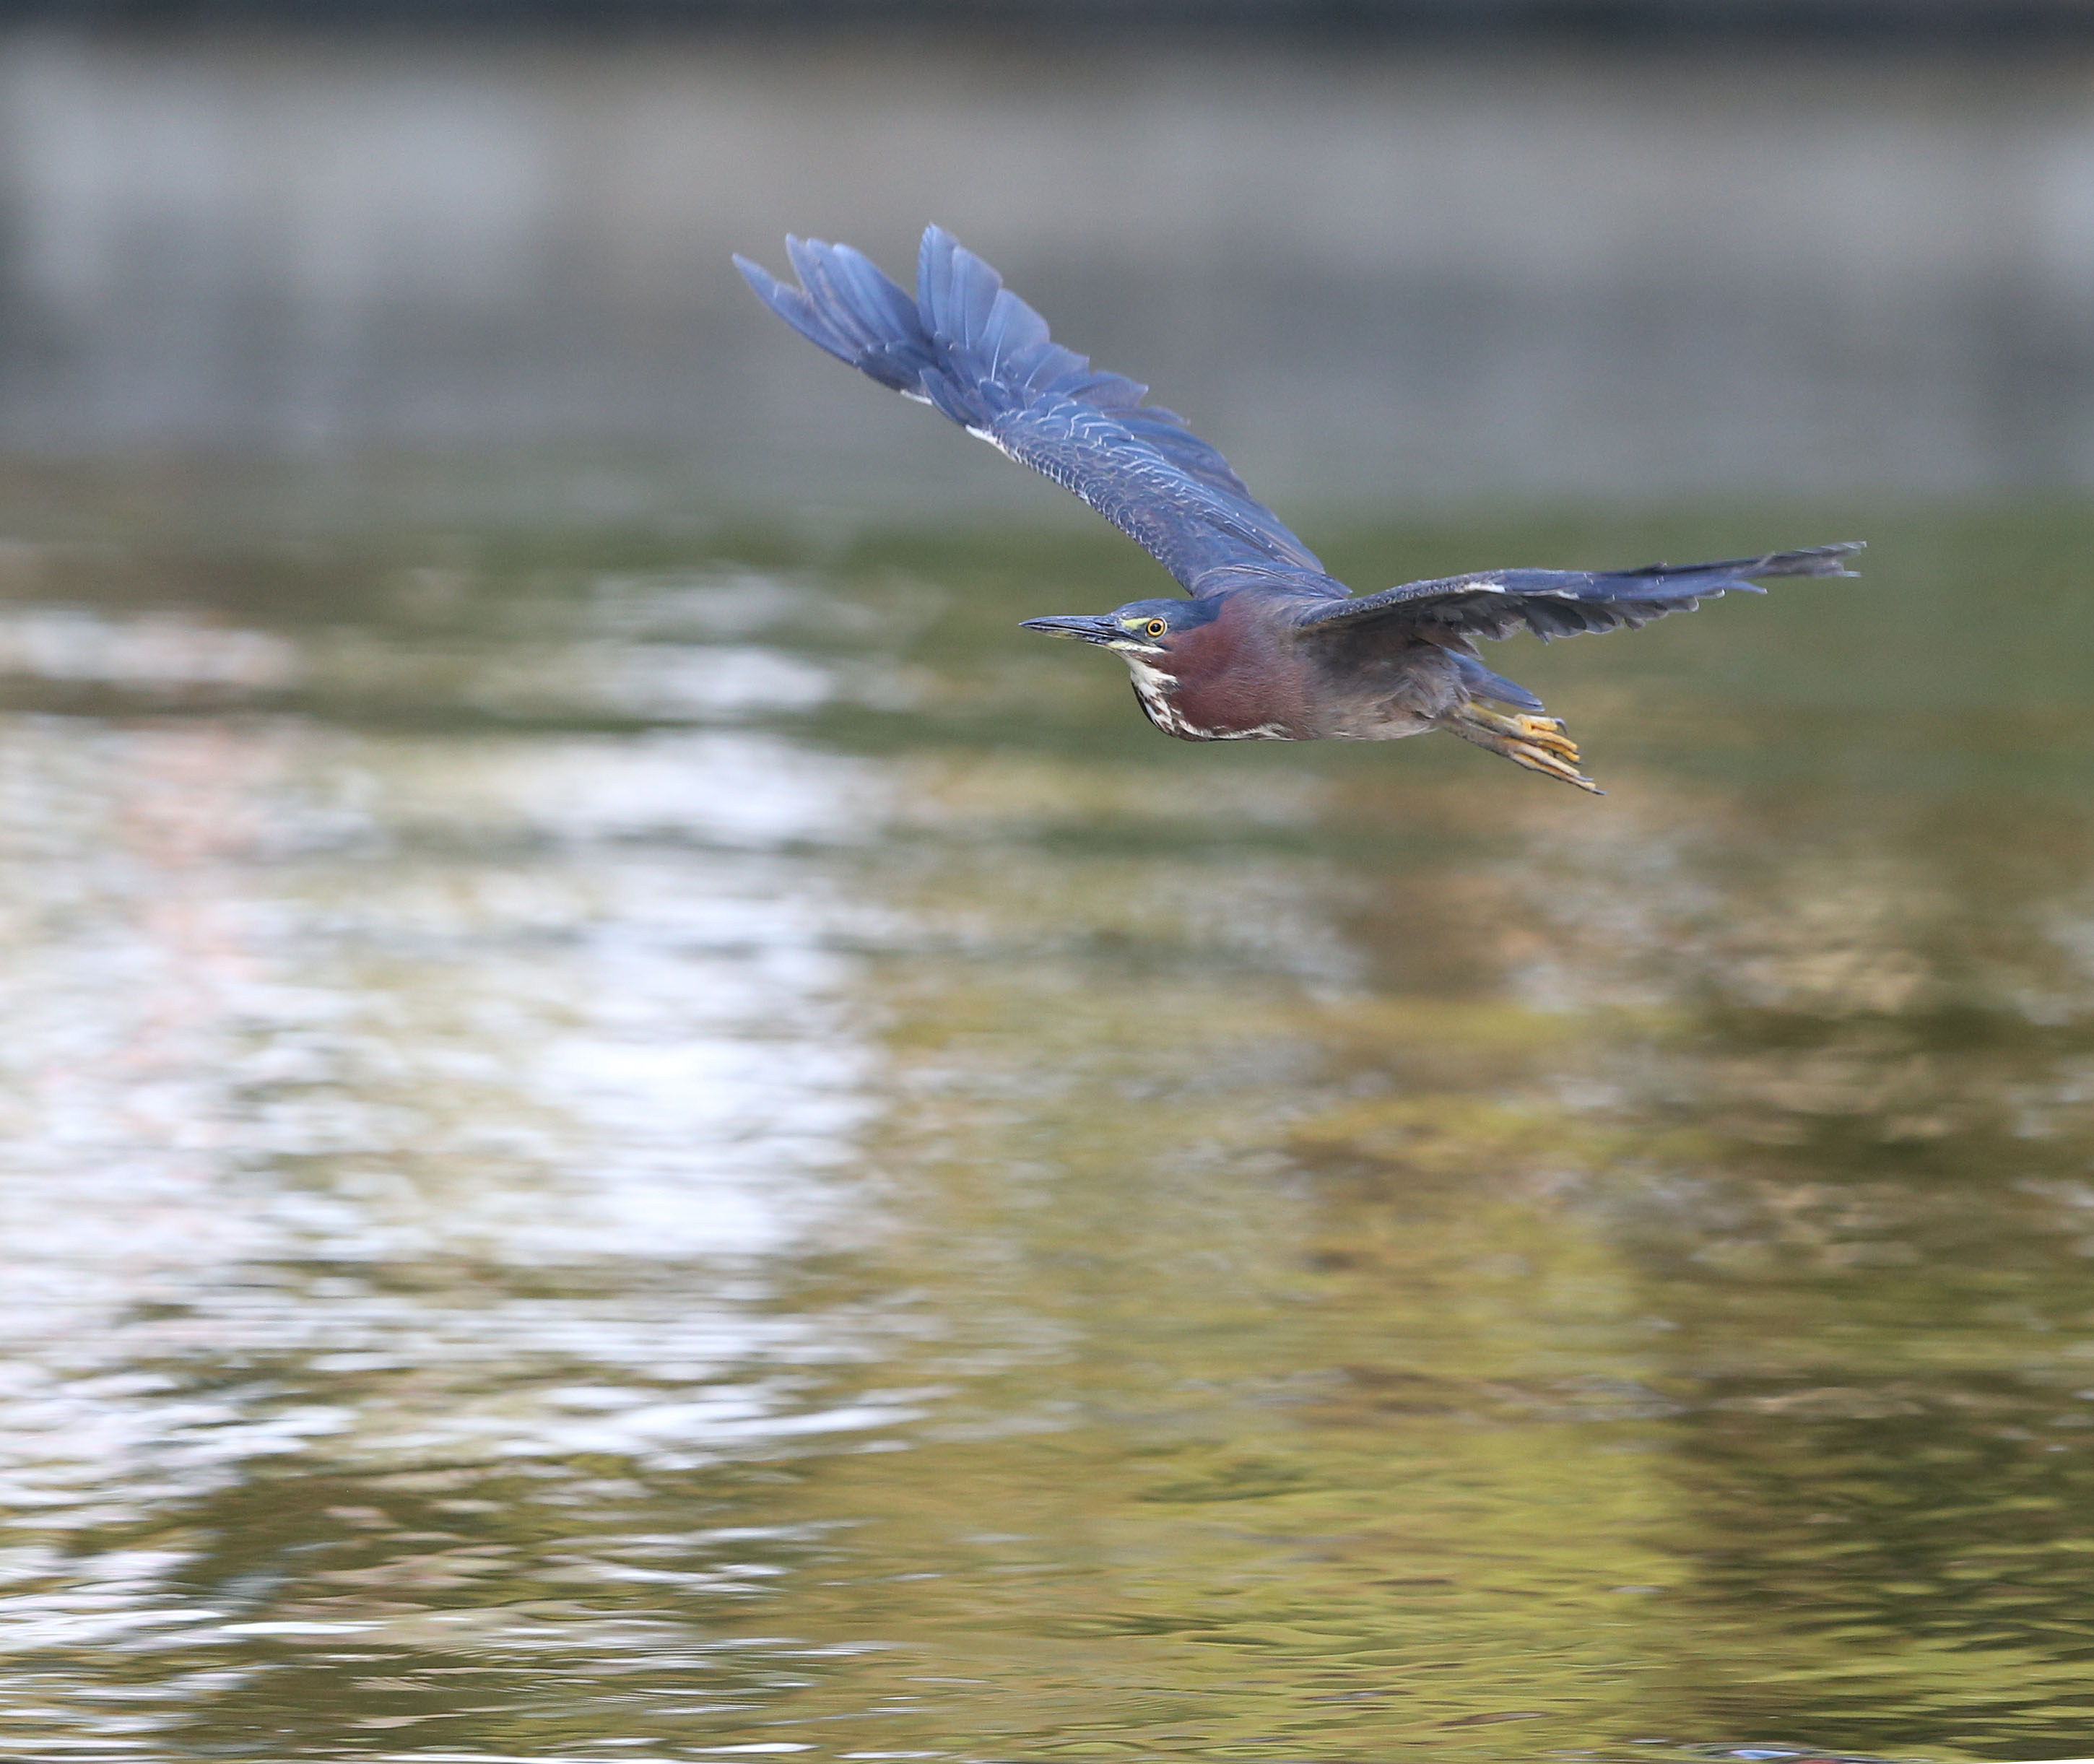 Adult Green Heron in flight